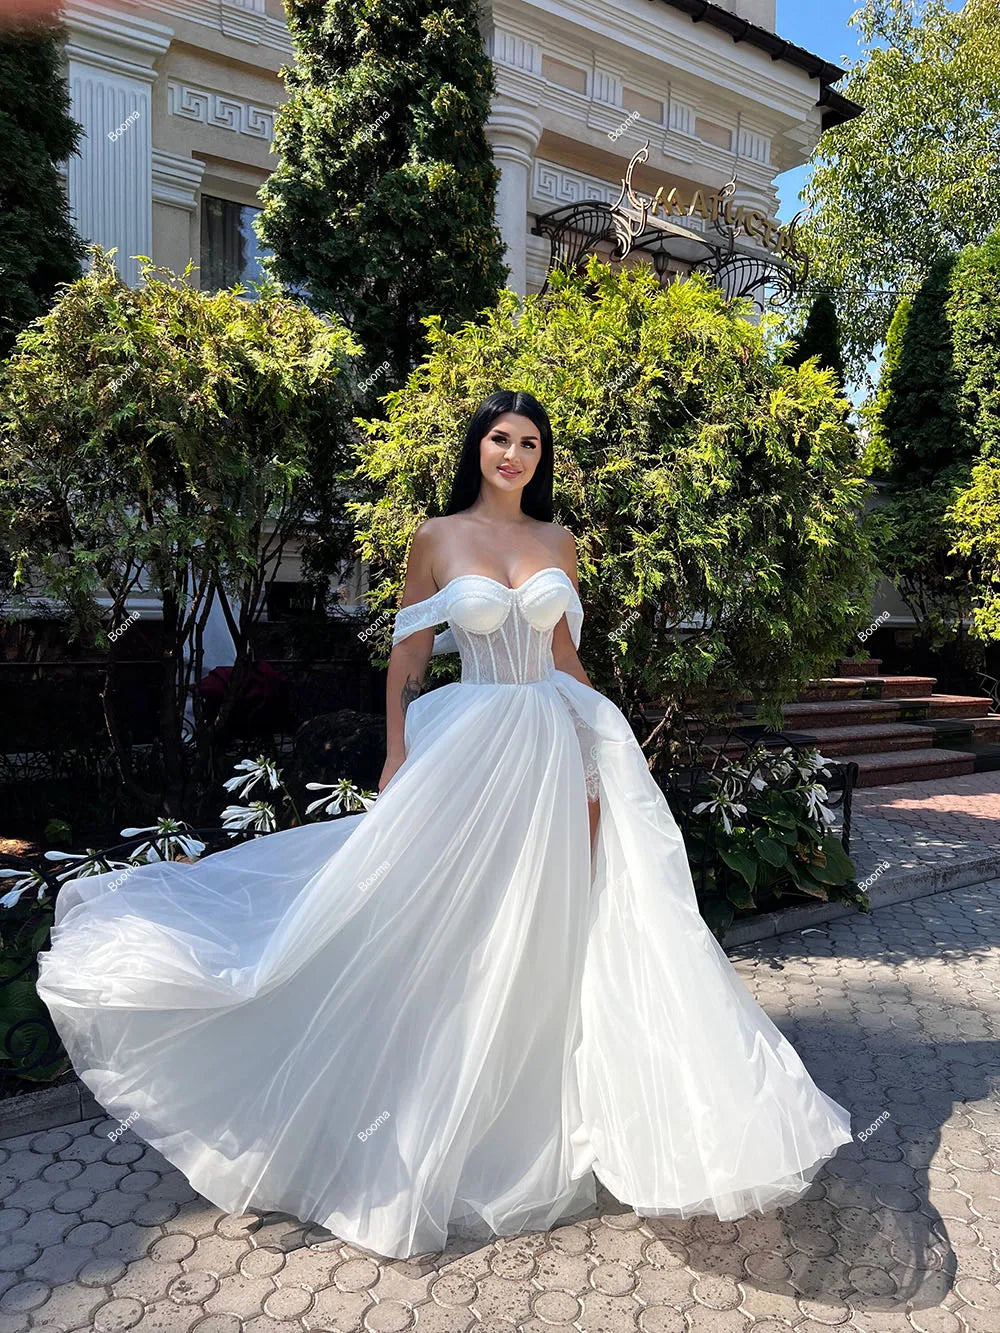 Gaun Perkahwinan Pantai A-Line untuk Wanita dari Bahu Bahu Pengantin Petang Malam Kaki Tinggi Renda Renda Pakaian Bridasl Panjang